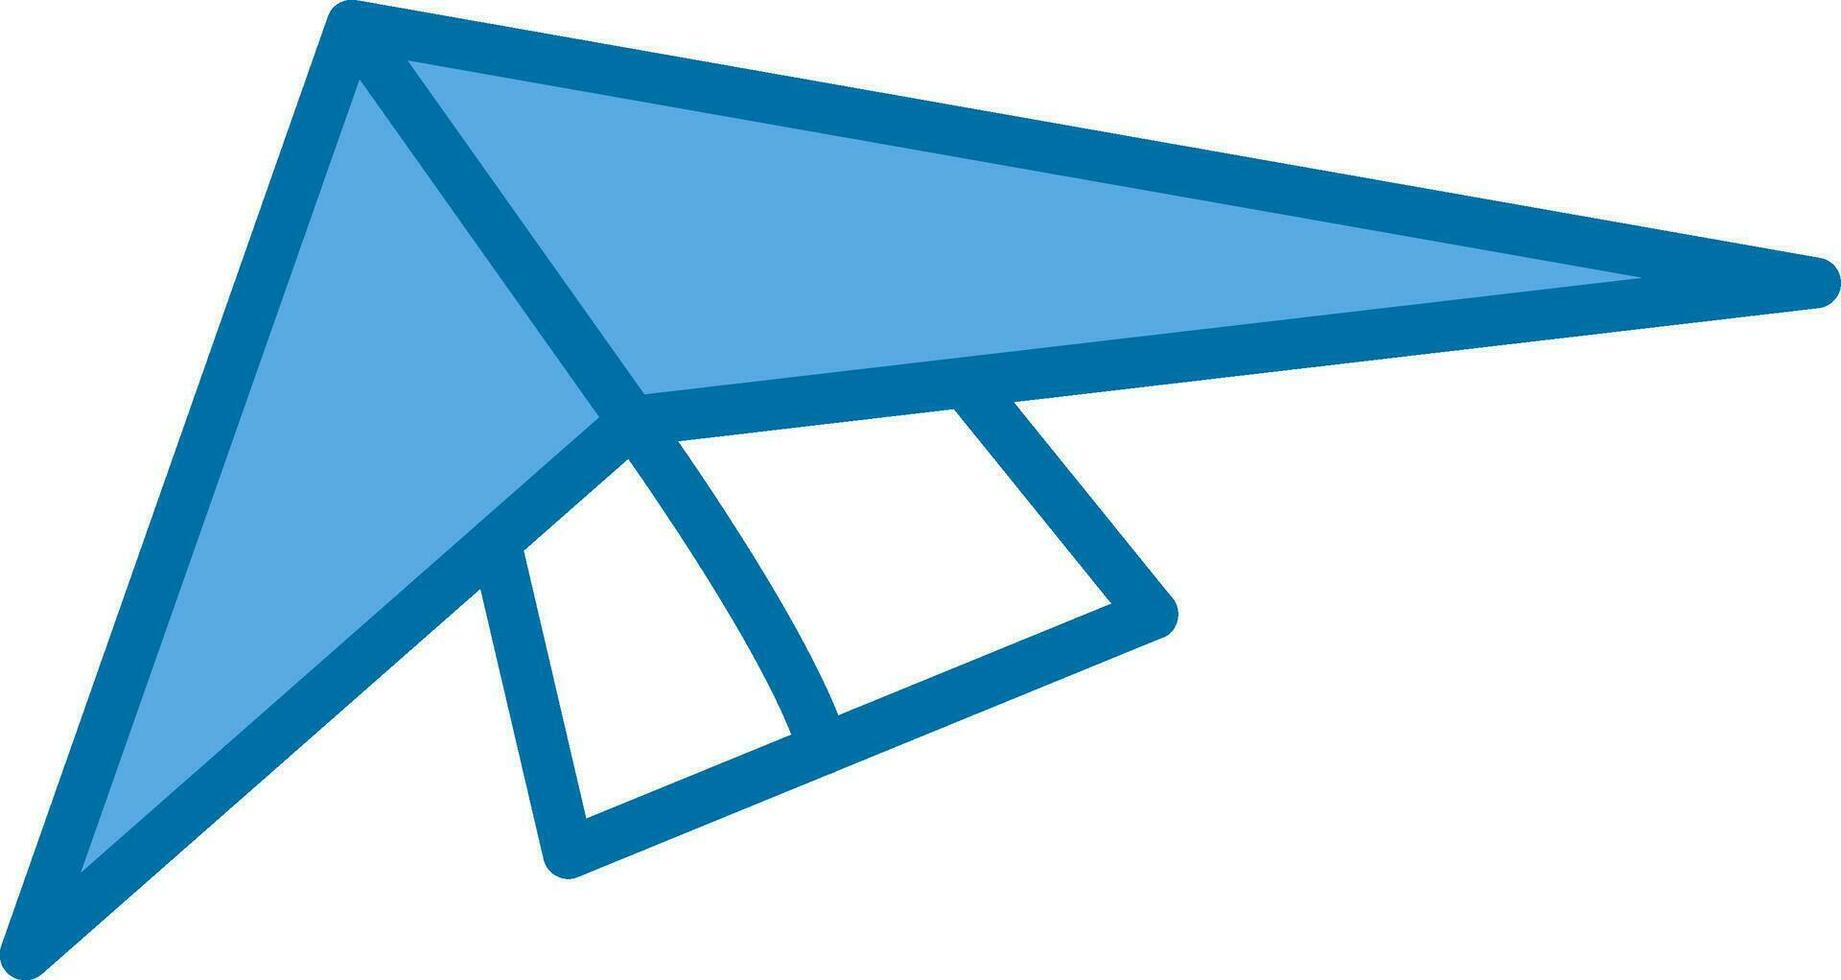 Drachenfliegen-Vektor-Icon-Design vektor